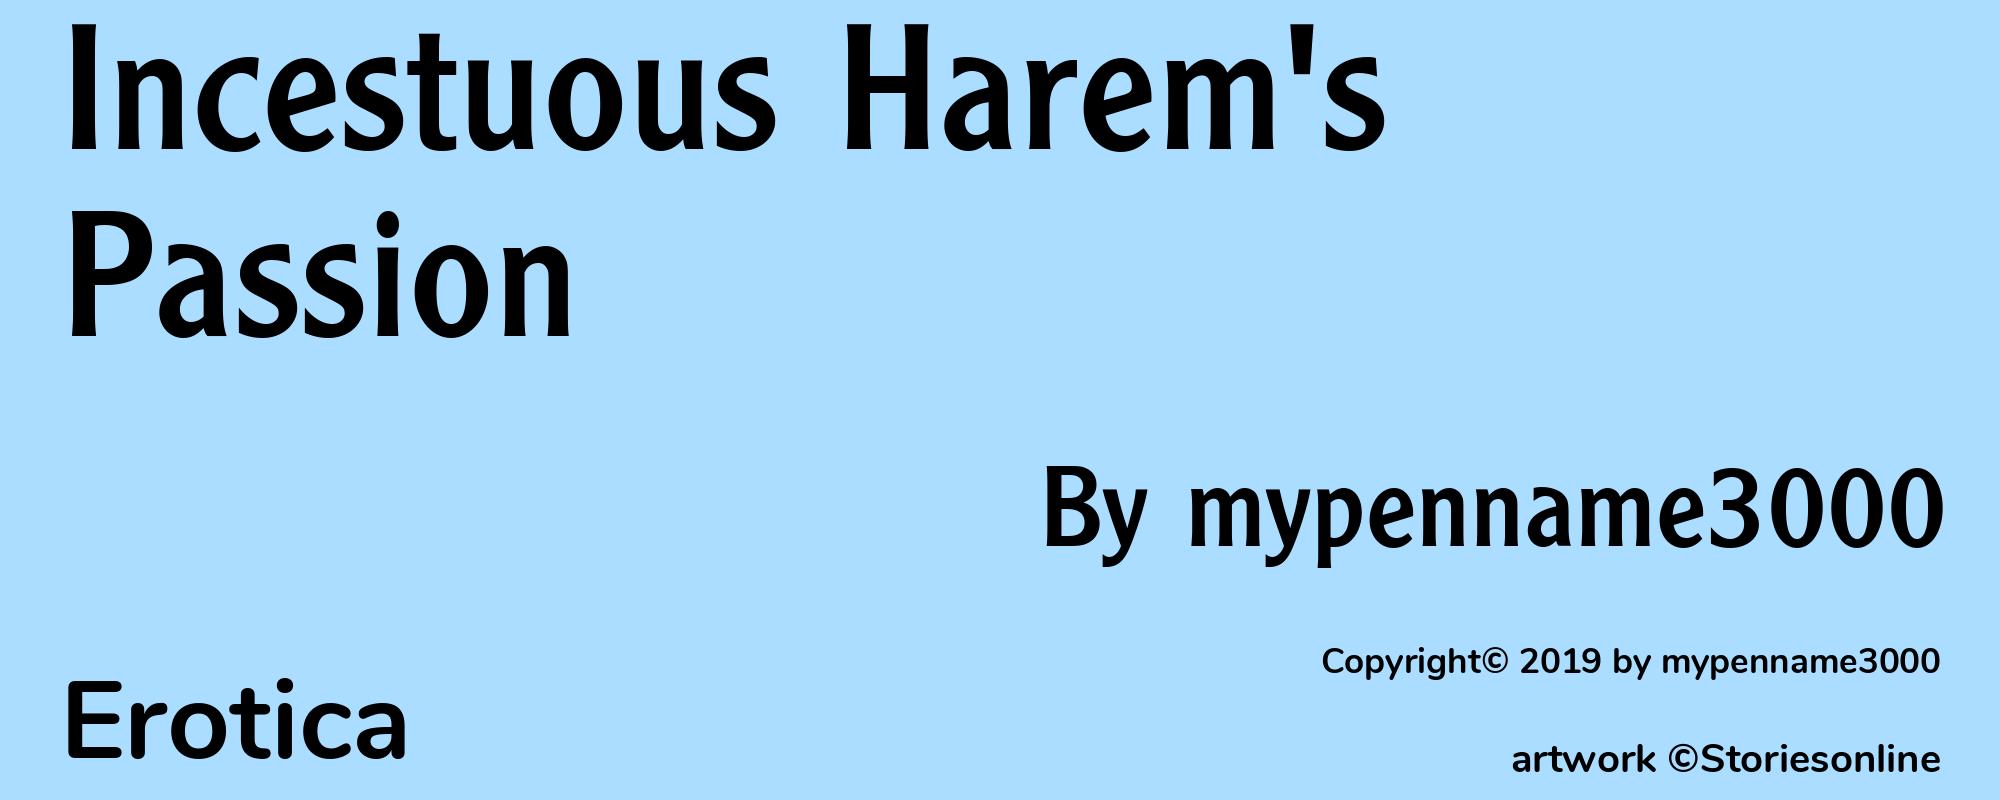 Incestuous Harem's Passion - Cover